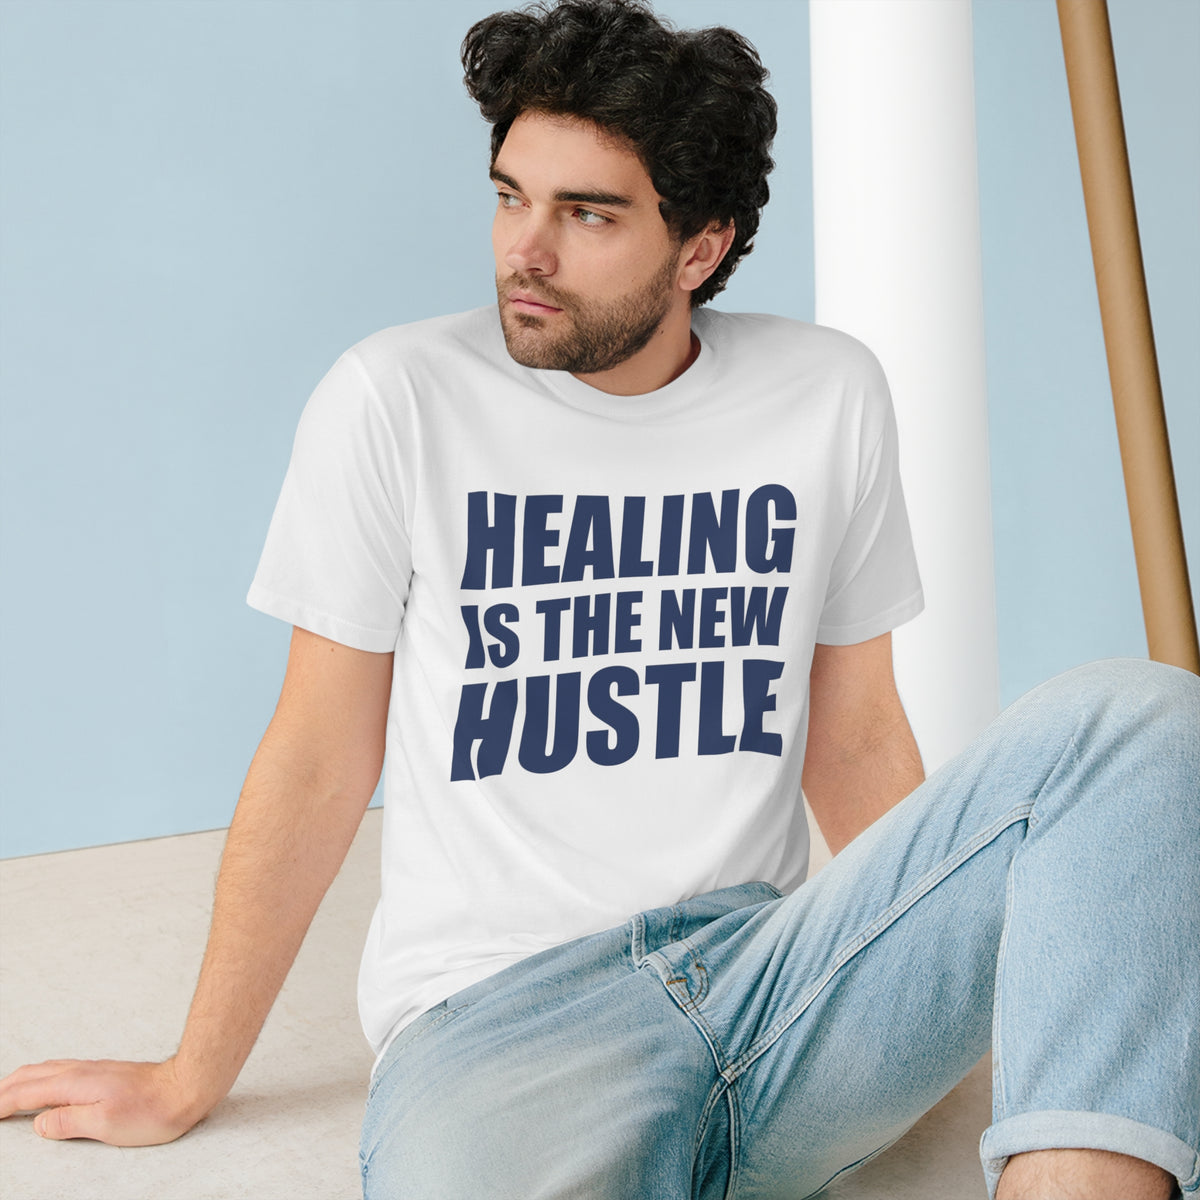 Healing is the new Hustle (organic)